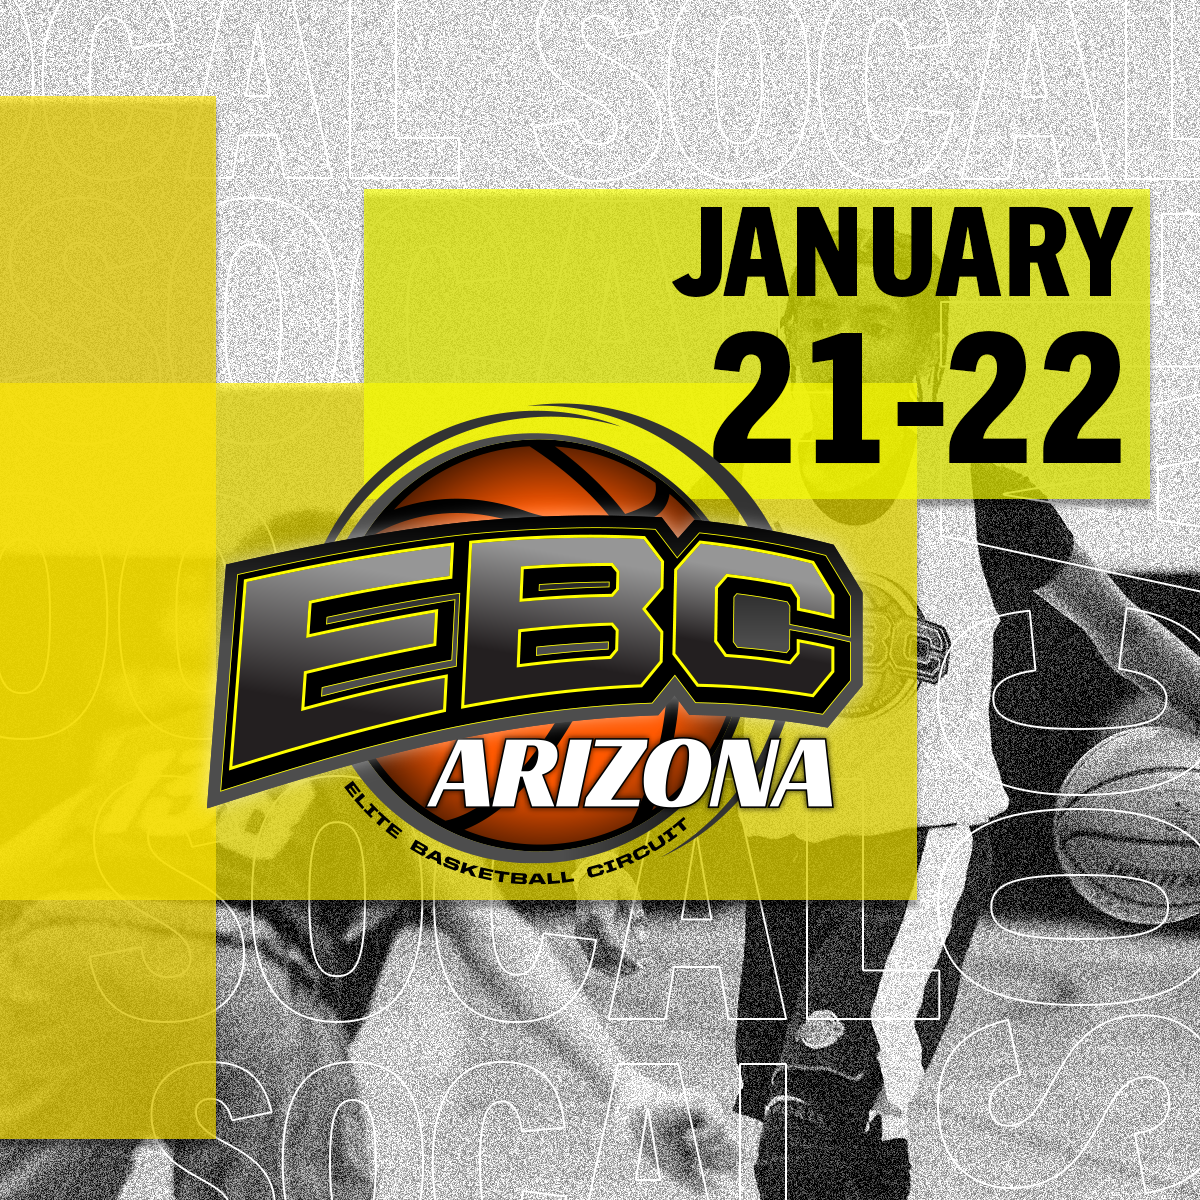 EBC Arizona: January 21-22